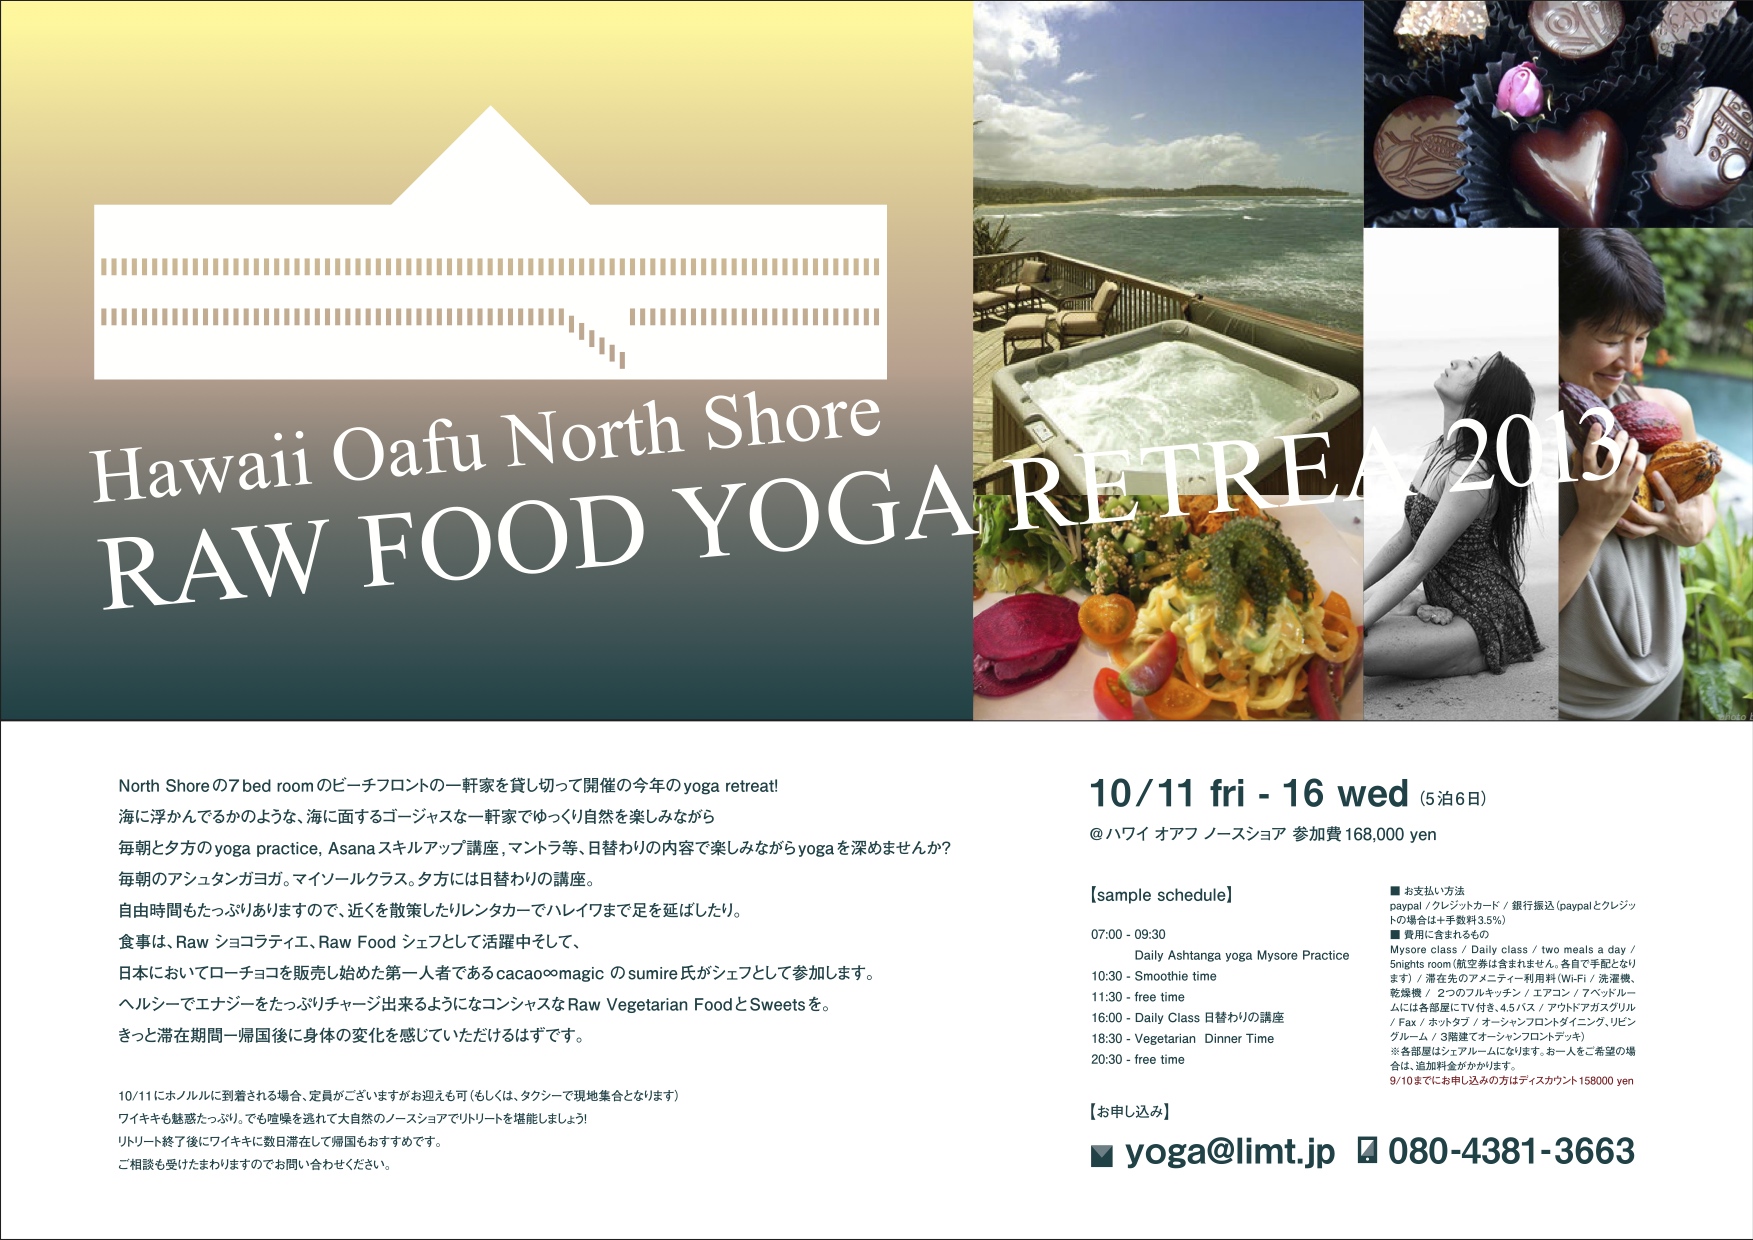 http://www.limt.jp/yogalimt/YogaRetreat2013_3.jpg